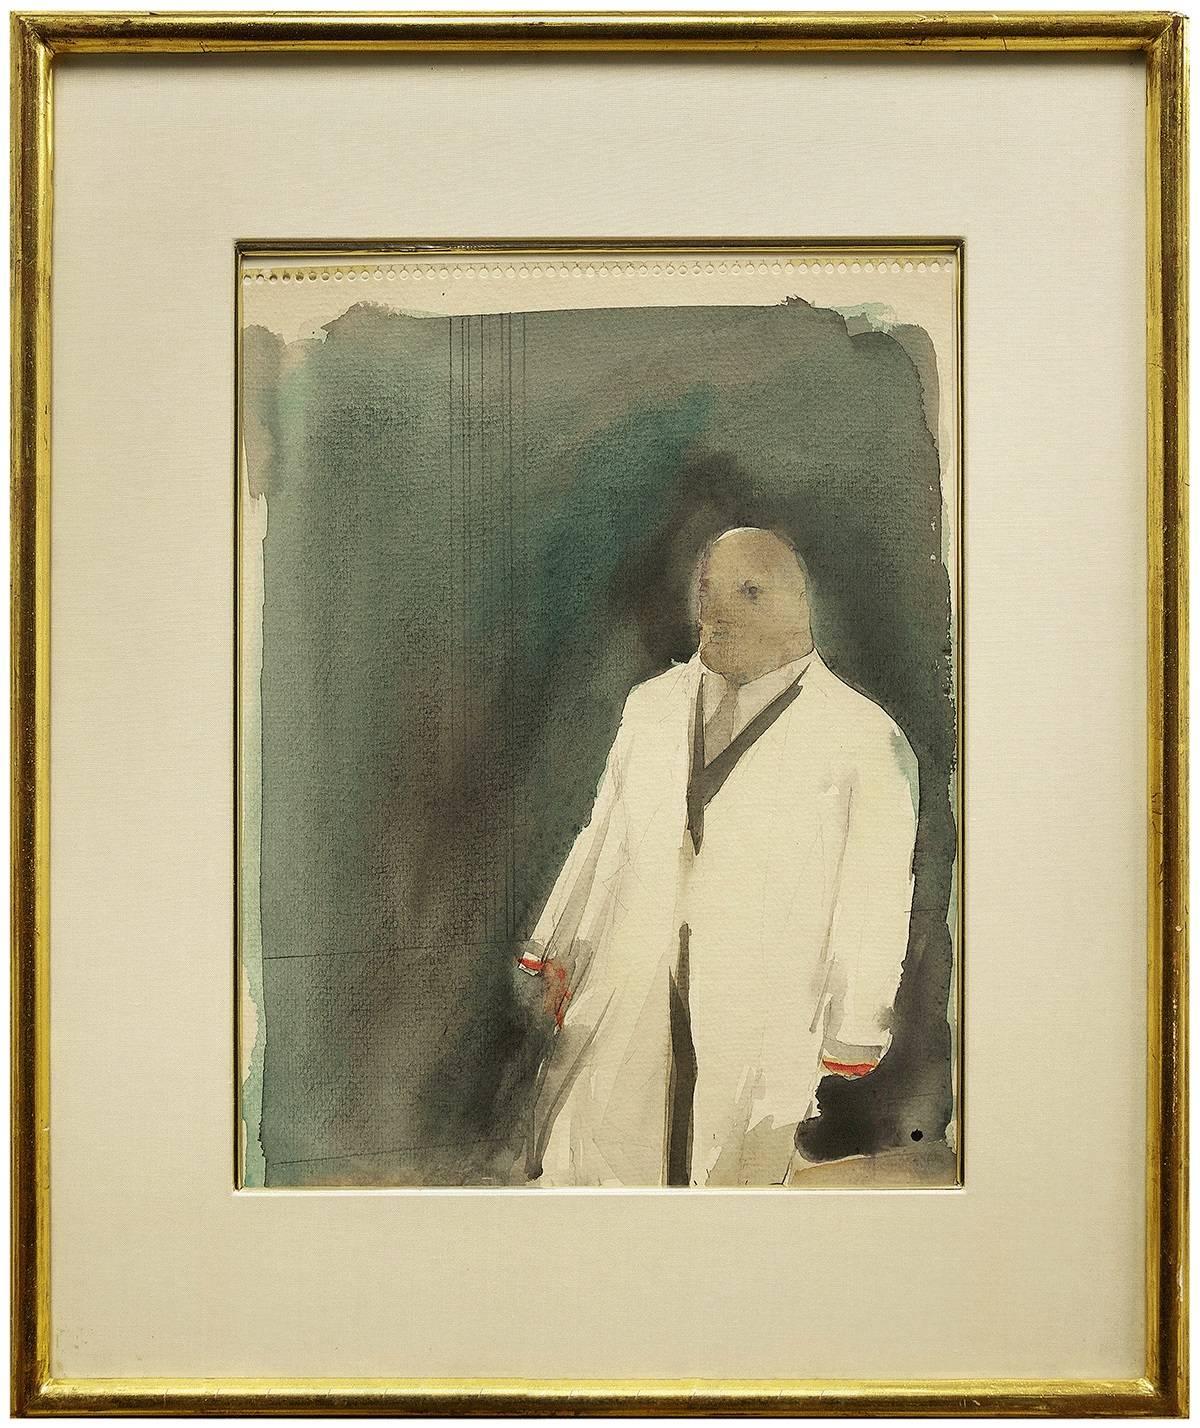 John Dobbs Figurative Art - Man in Raincoat, Vintage Modern Watercolor Painting